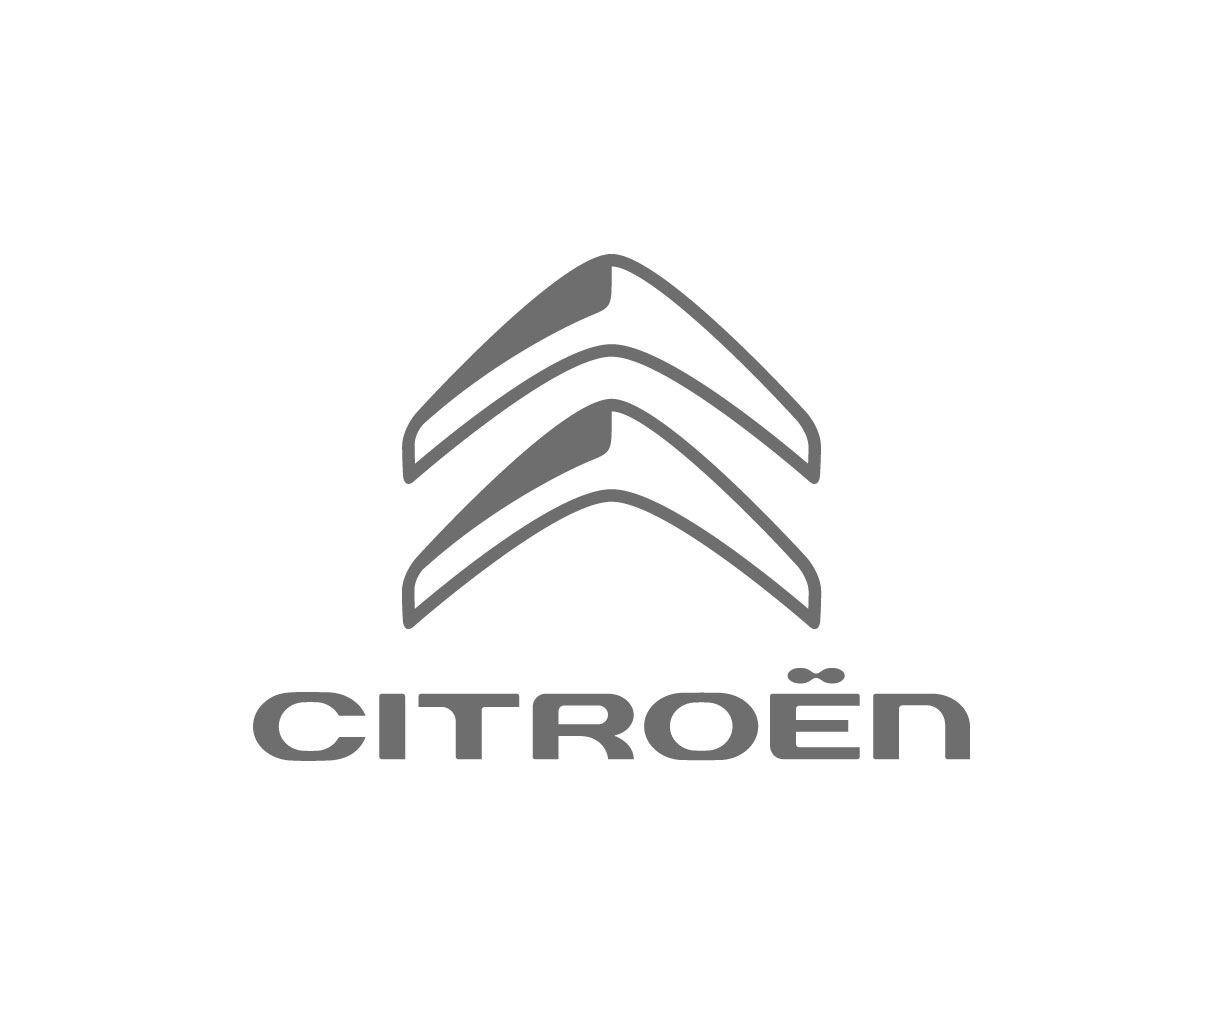 blog.citroen.gr - Citroën είναι σταθερά πρωτοπόρος